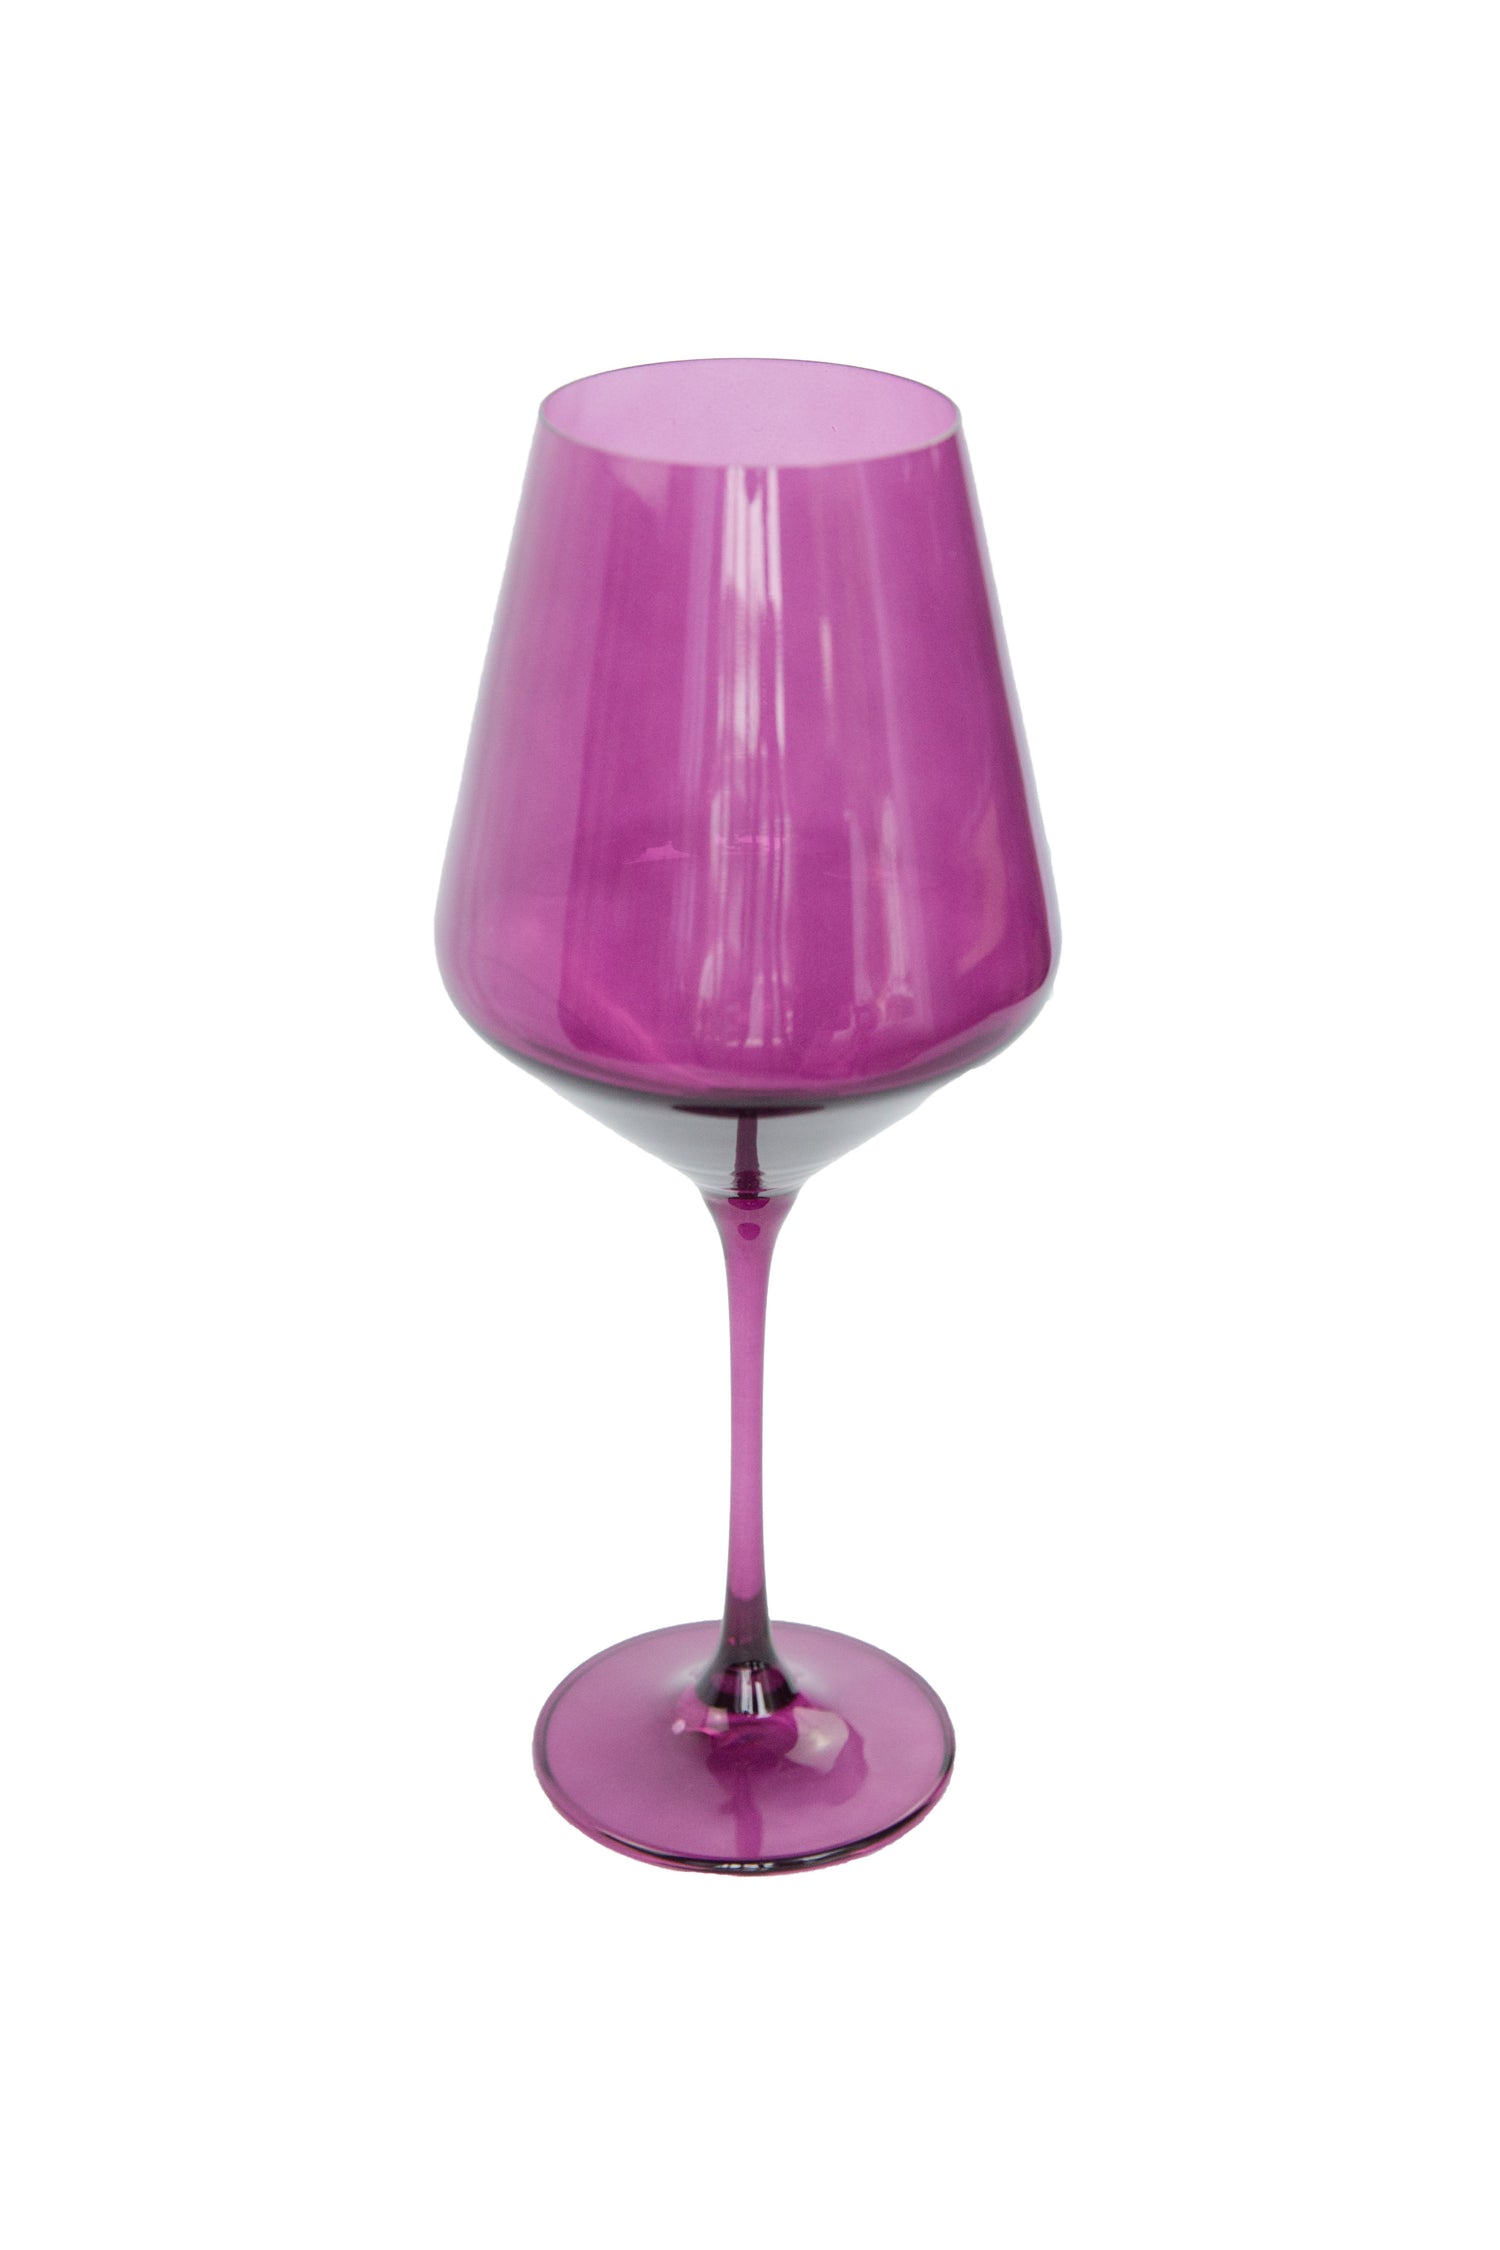 Estelle Colored Wine Stemware - Set of 6 {Amethyst}